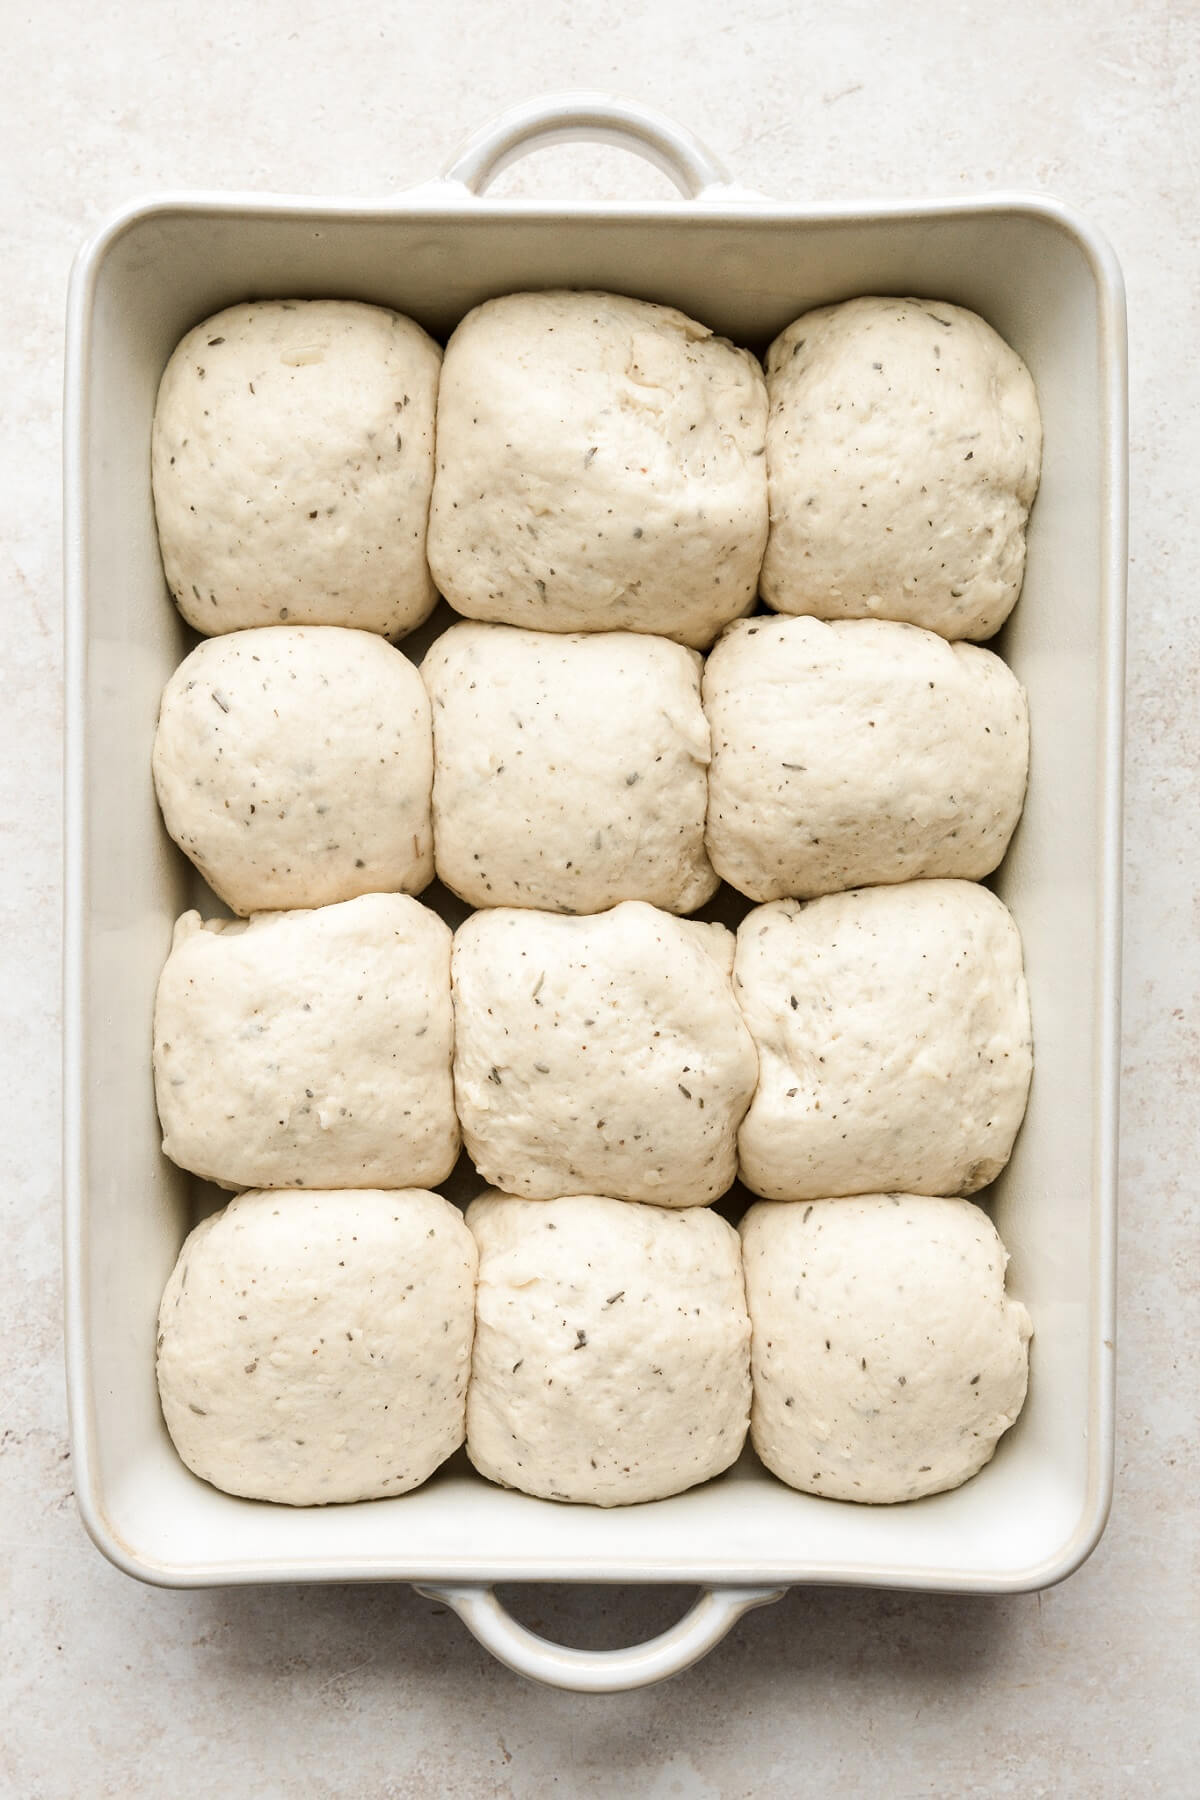 Garlic herb bread rolls rising in a baking pan.